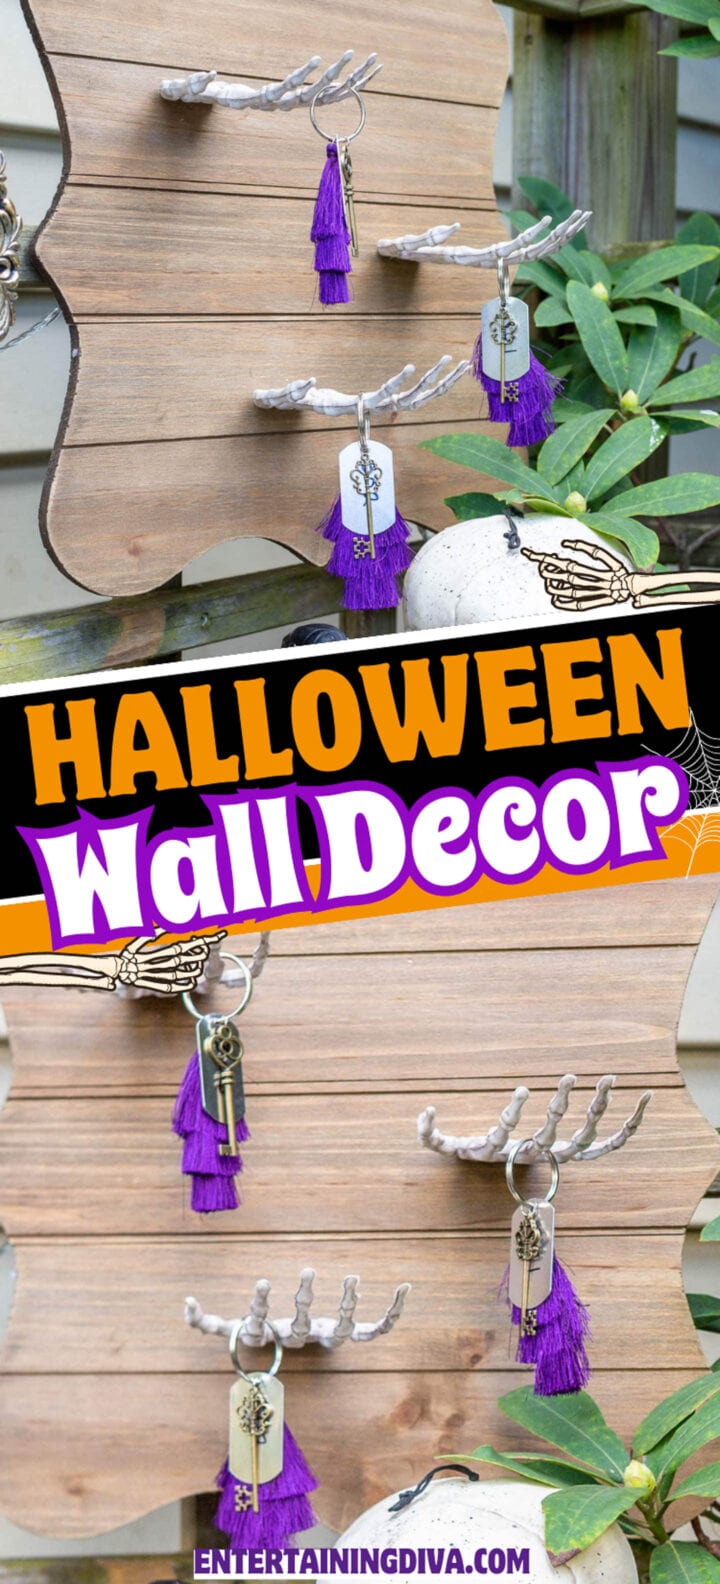 Halloween Decor Halloween Decorations Witches Halloween Wall - Etsy | Halloween  wall decor, Wall decals, Halloween witch decorations